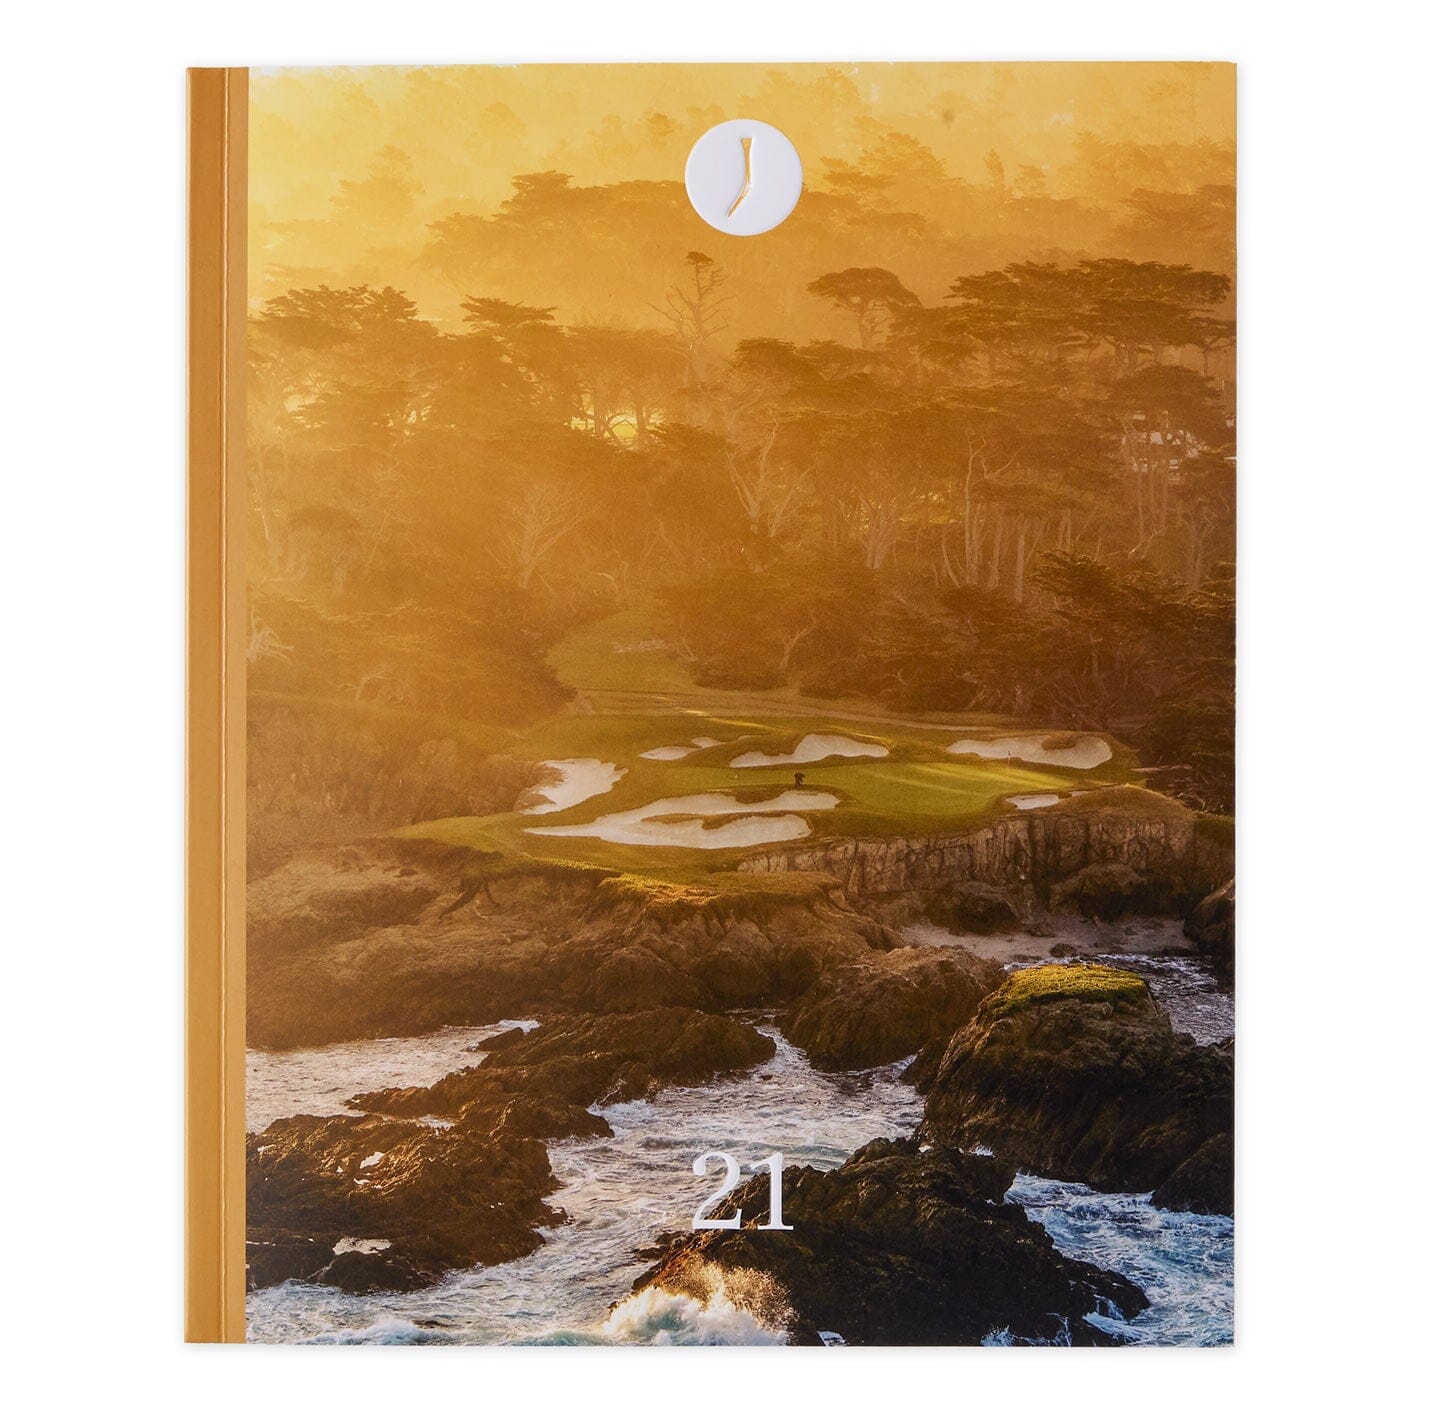 Golf Journal Brasil Issue no. 1B by Anipress - Issuu